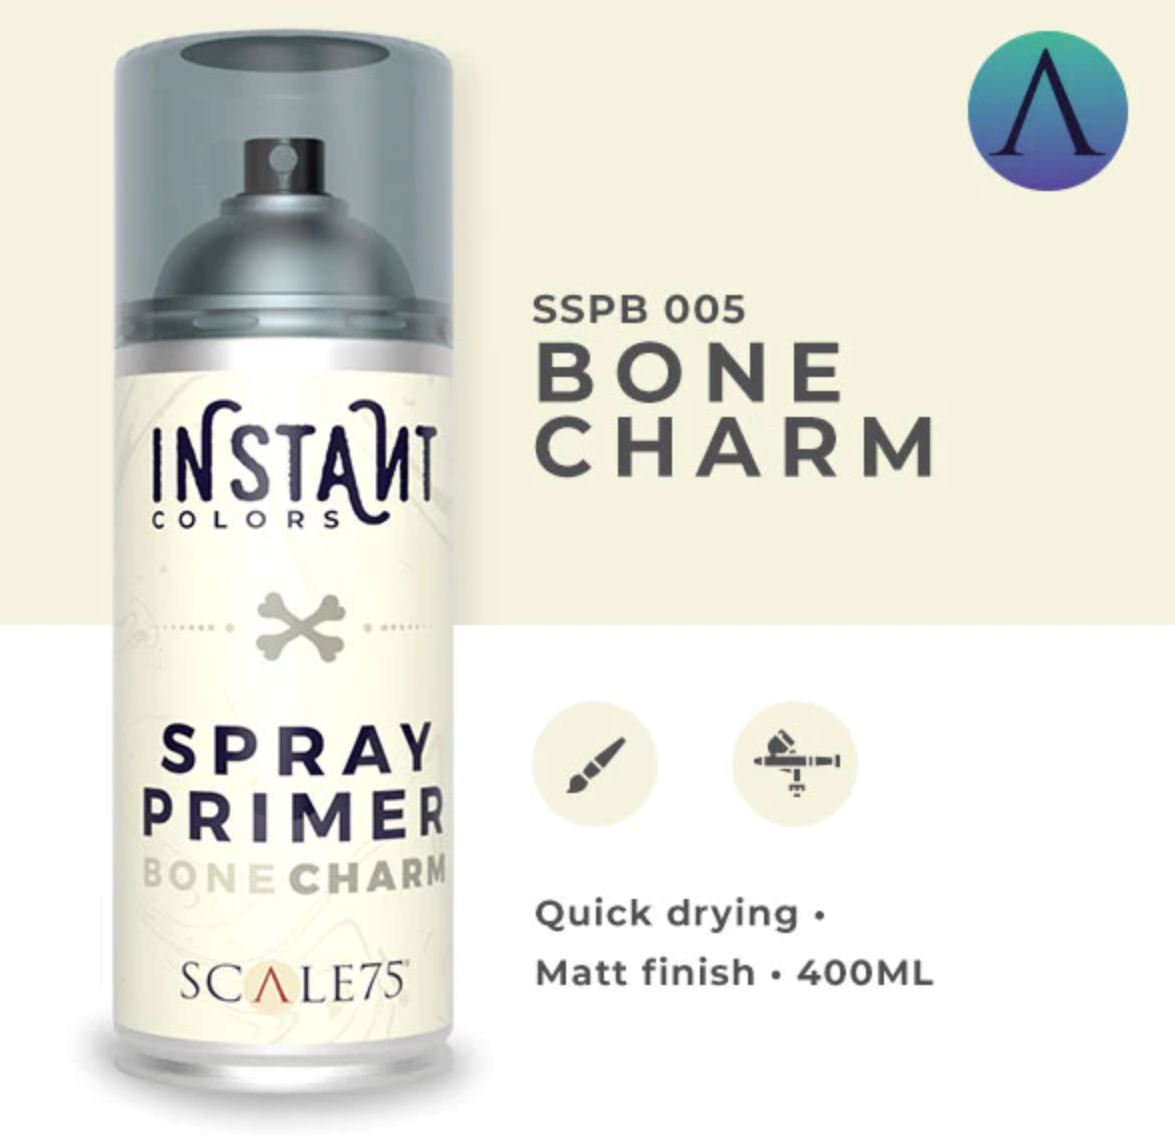 Scale 75 -  Instant Colors: Bone Charm Primer (400ml)